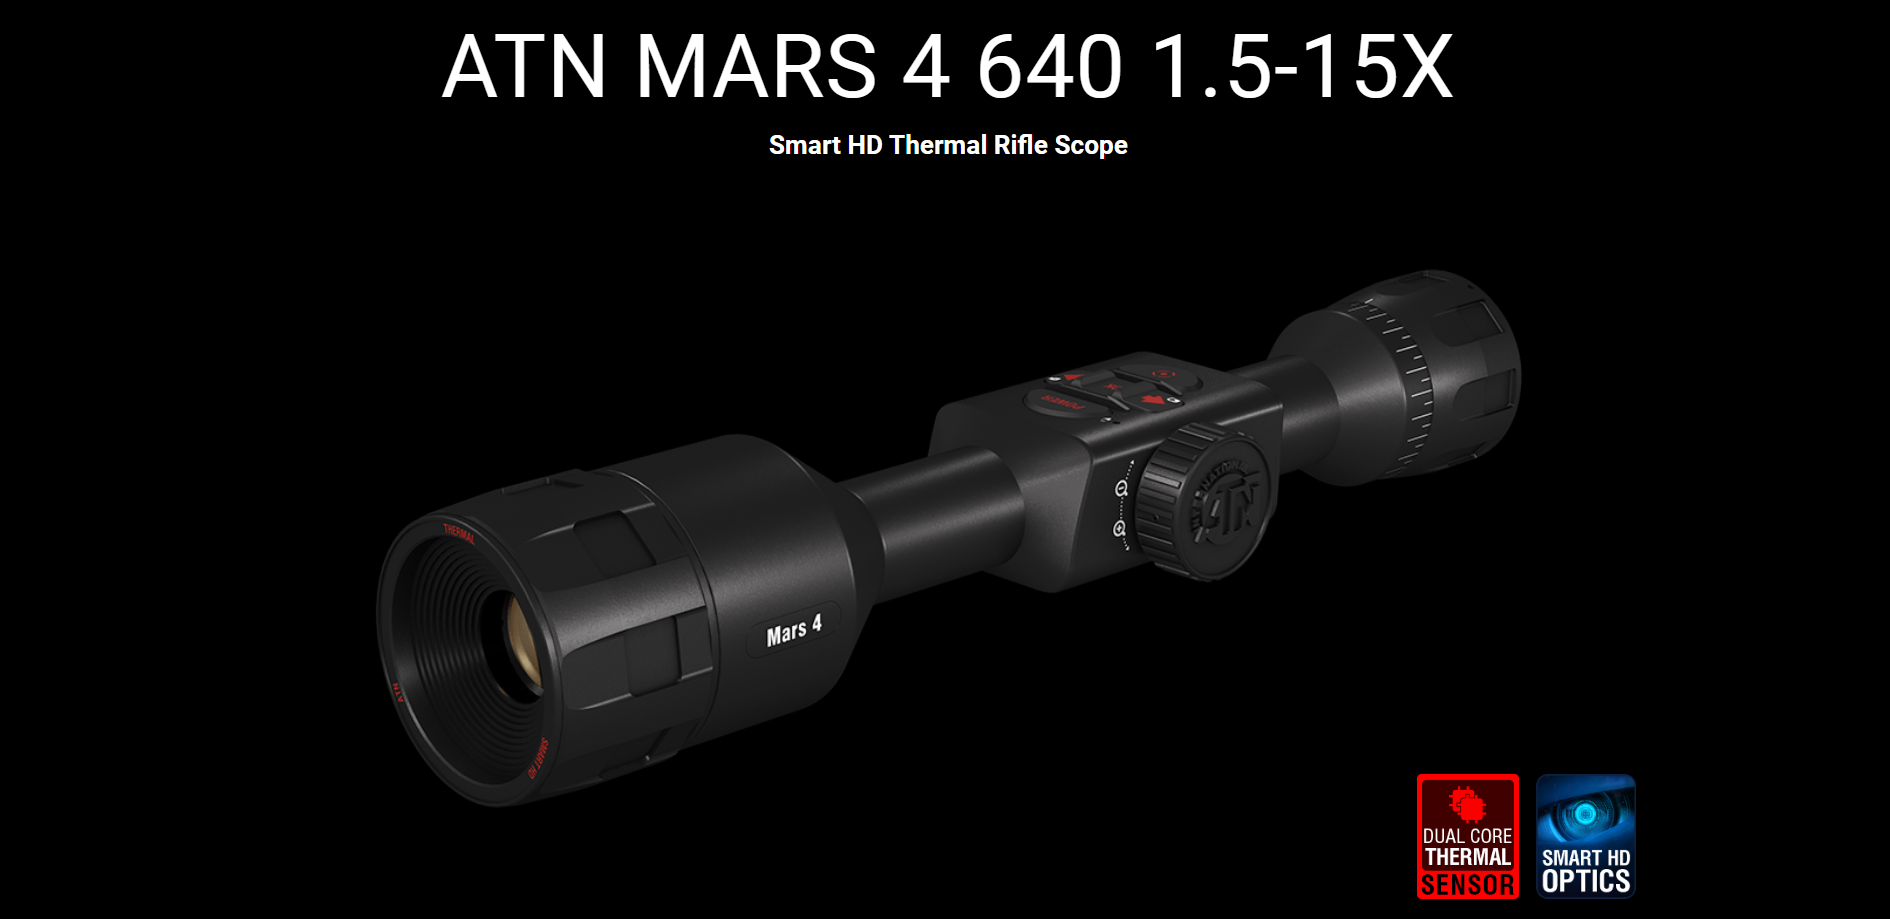 ATN MARS 4 640 1.5-15X